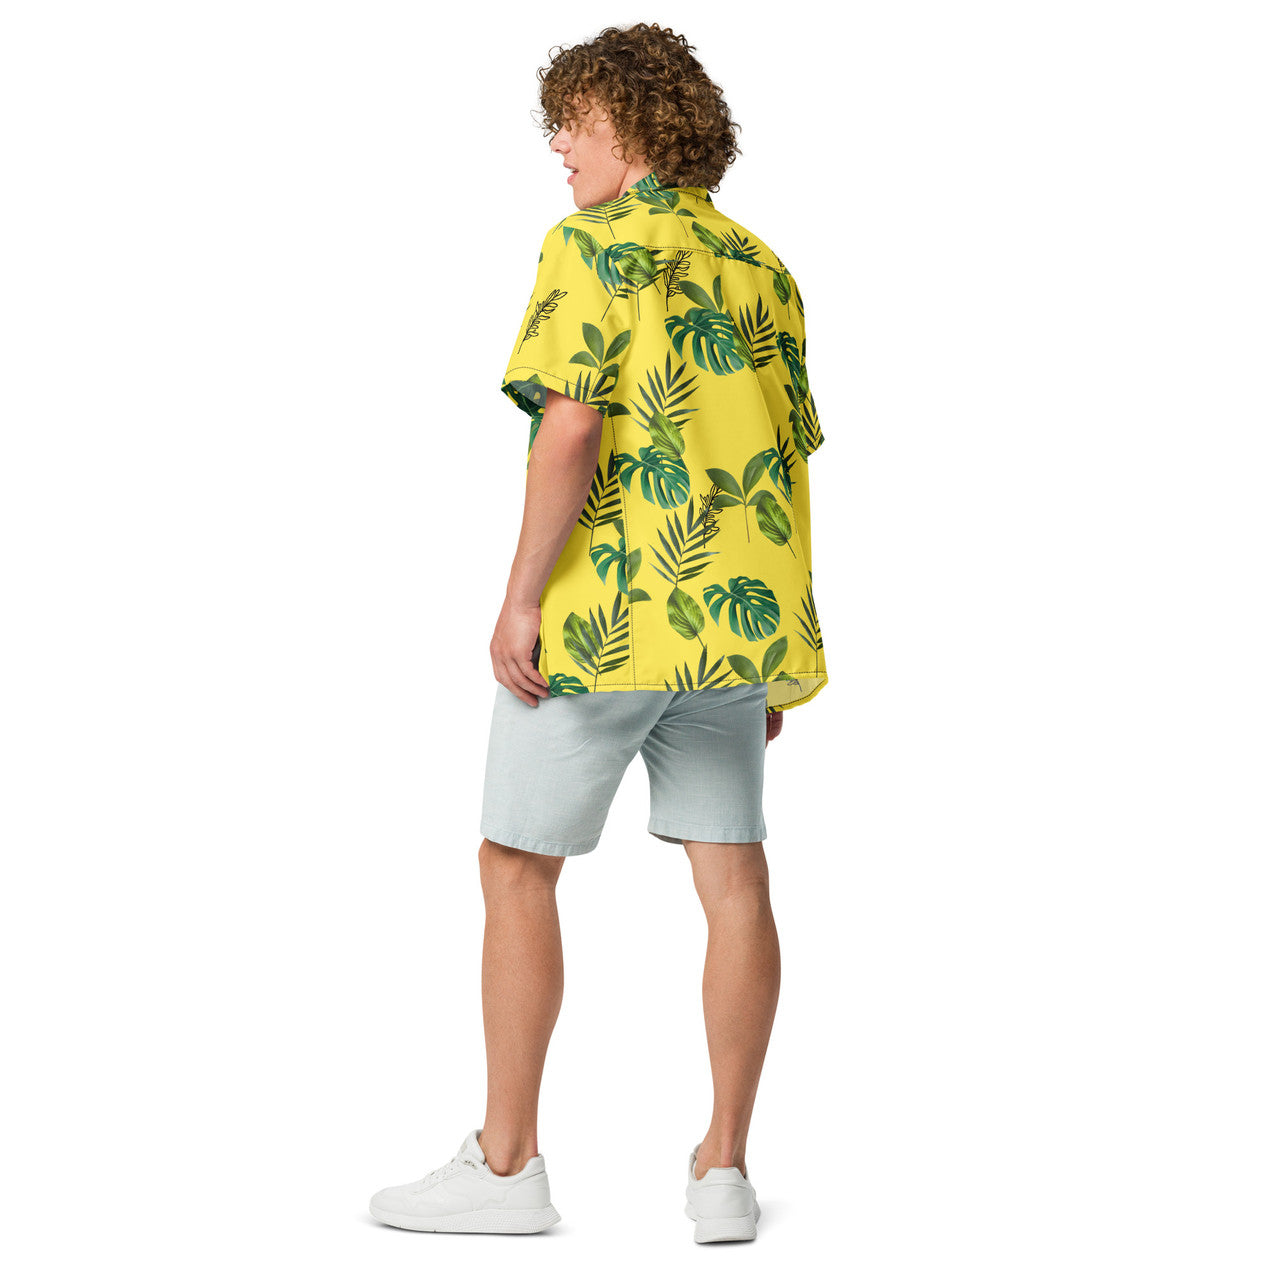 Klaus Tropical Yellow KiSS Unisex button shirt - Yellow Umbrella Academy Inspired Robert Sheehan cosplay